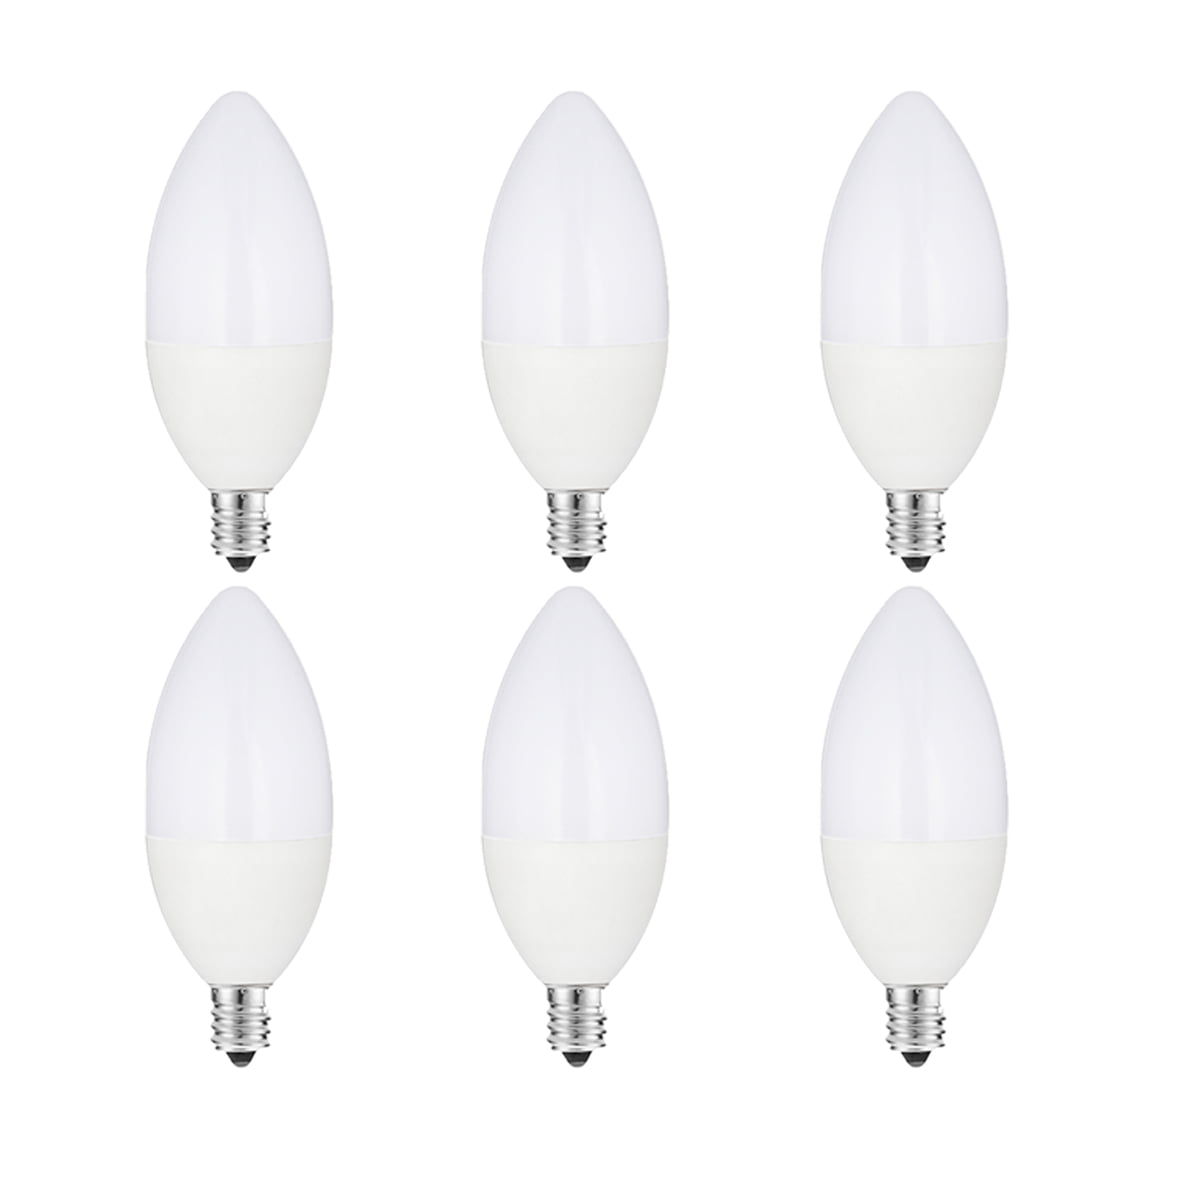 6W LED Candelabra Light Bulbs, 60W Halogen Equivalent ...